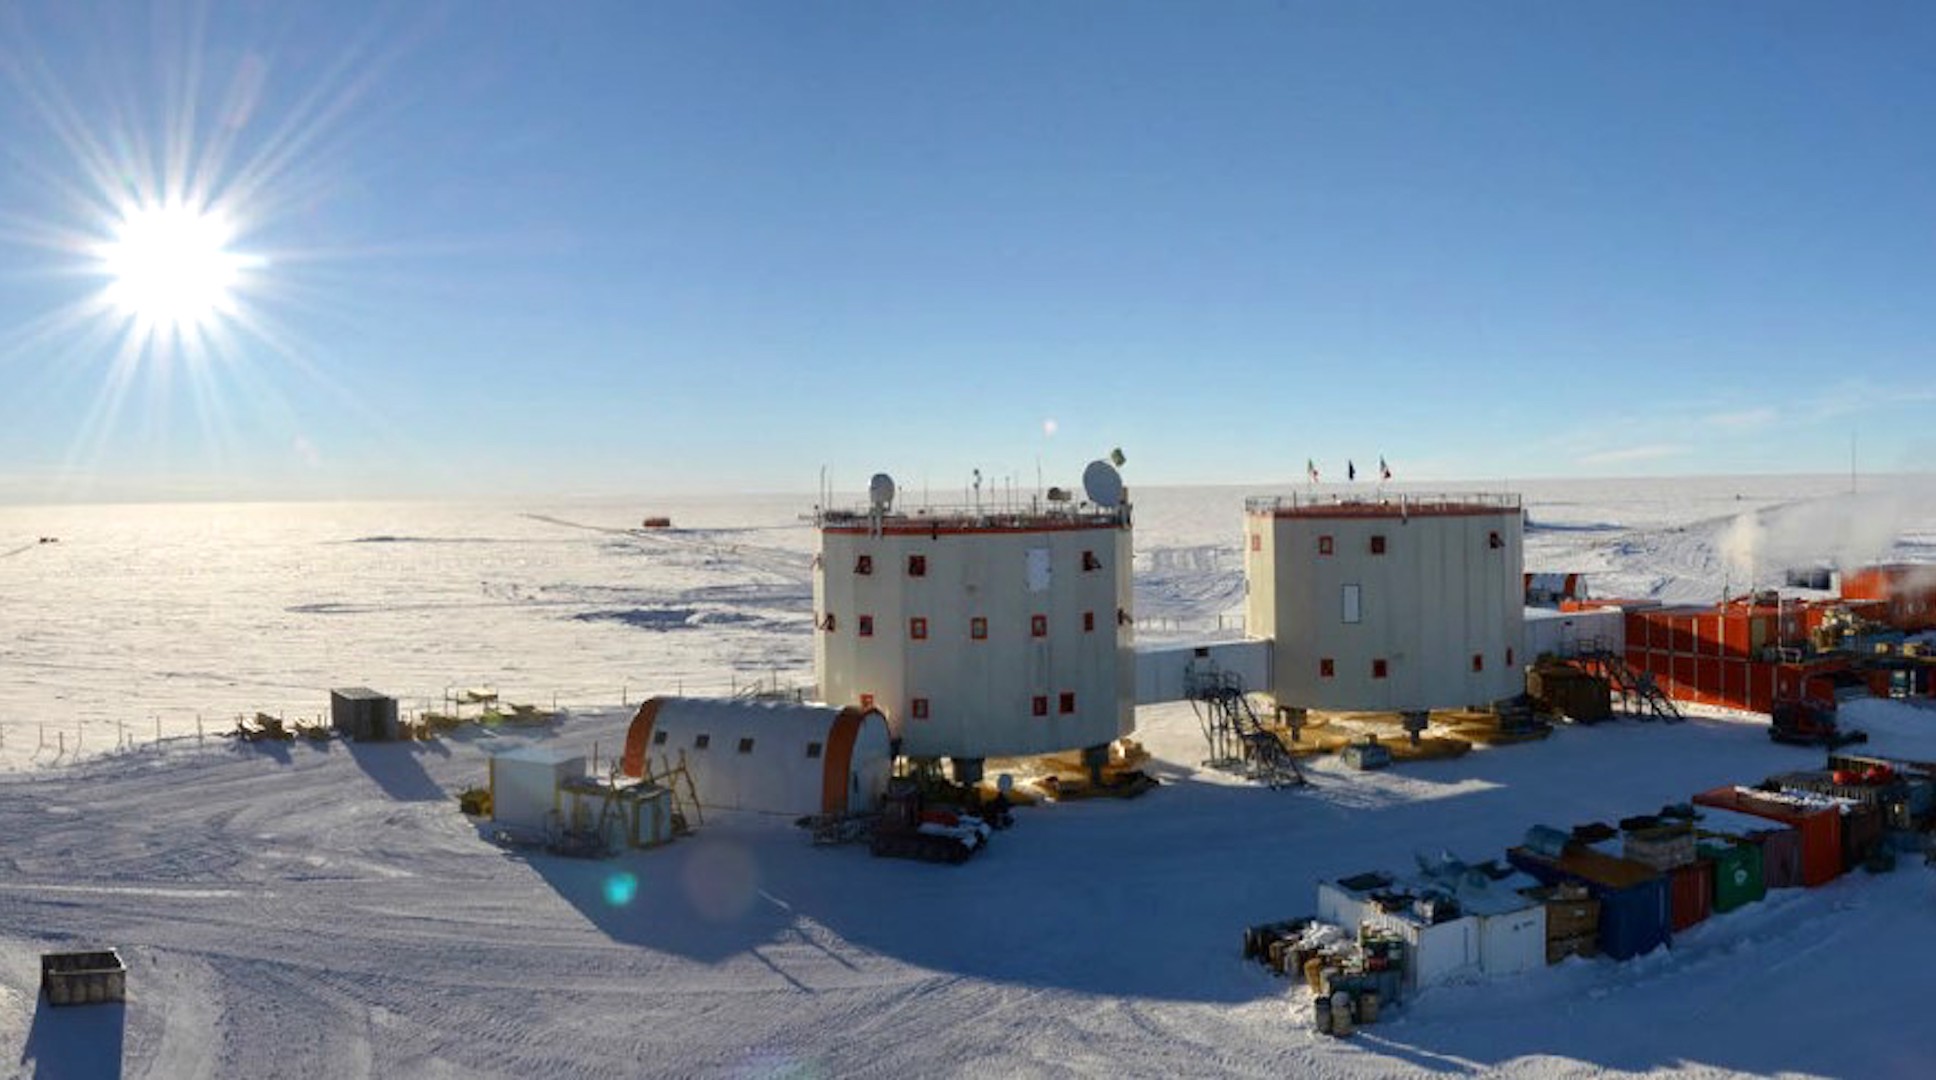 Programma Nazionale di Ricerche in Antartide (PNRA)